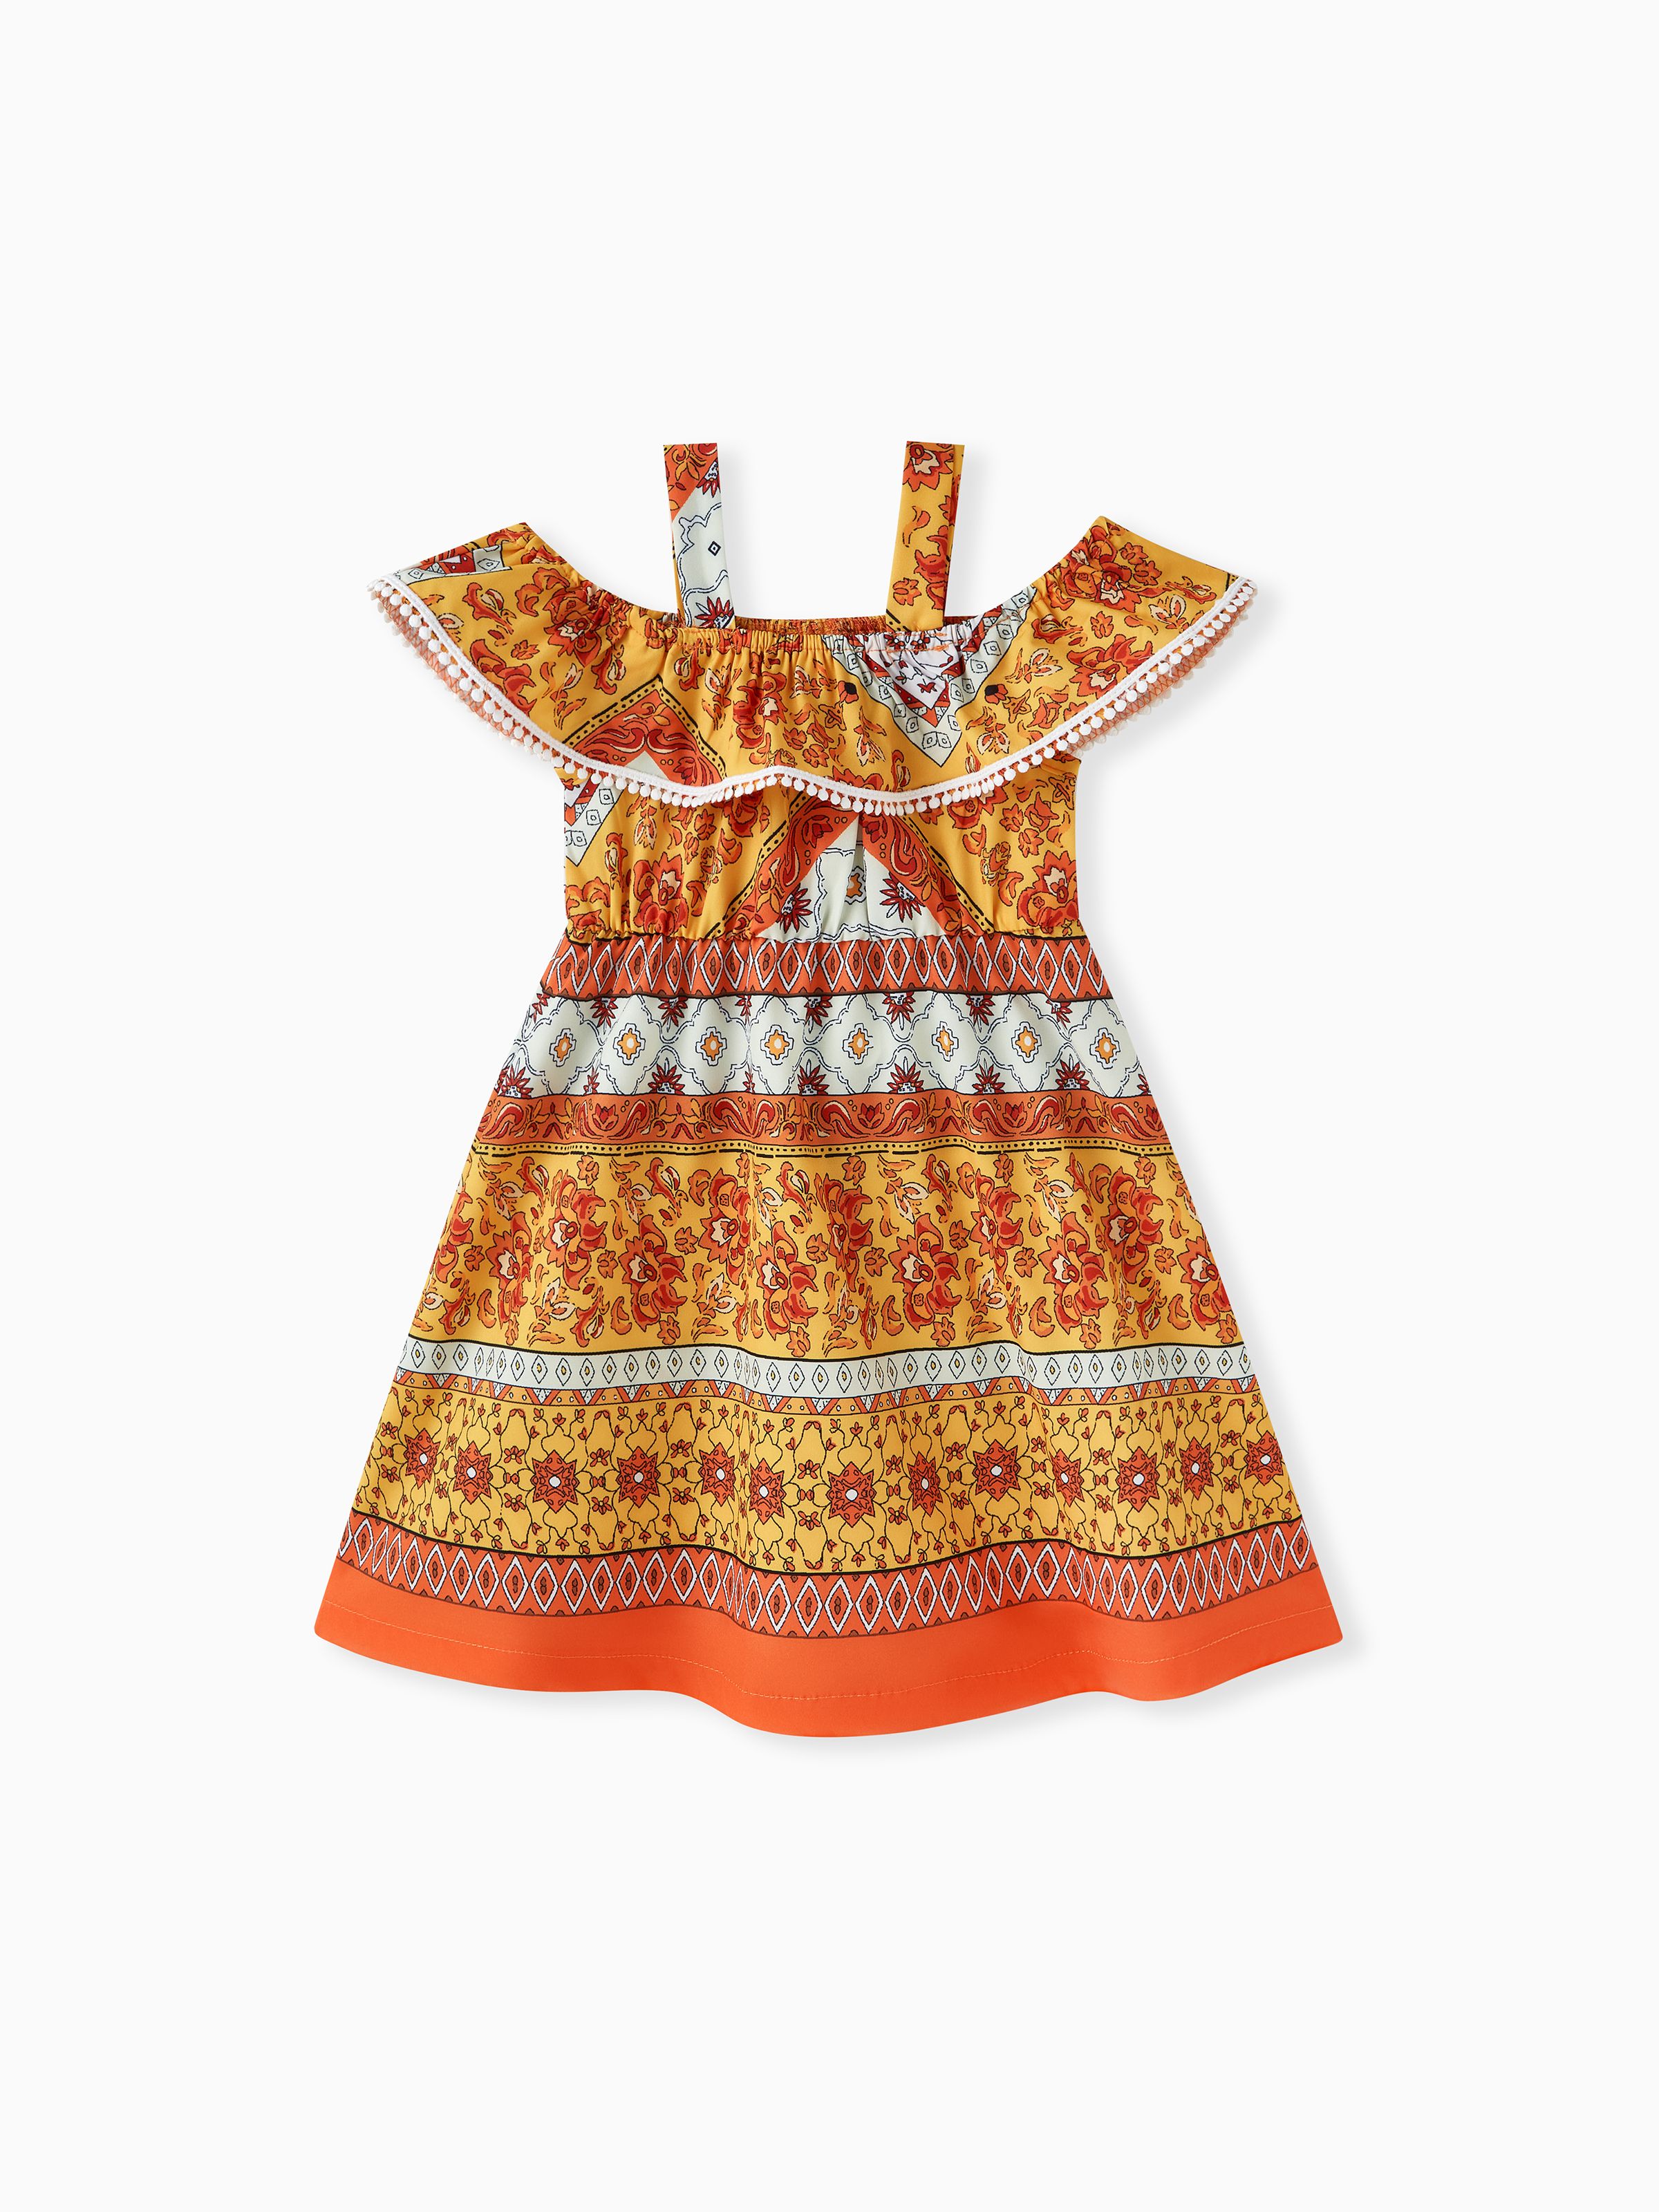 

Sweet Ethnic Toddler Girl Dress with Ruffle Edge - 1pcs